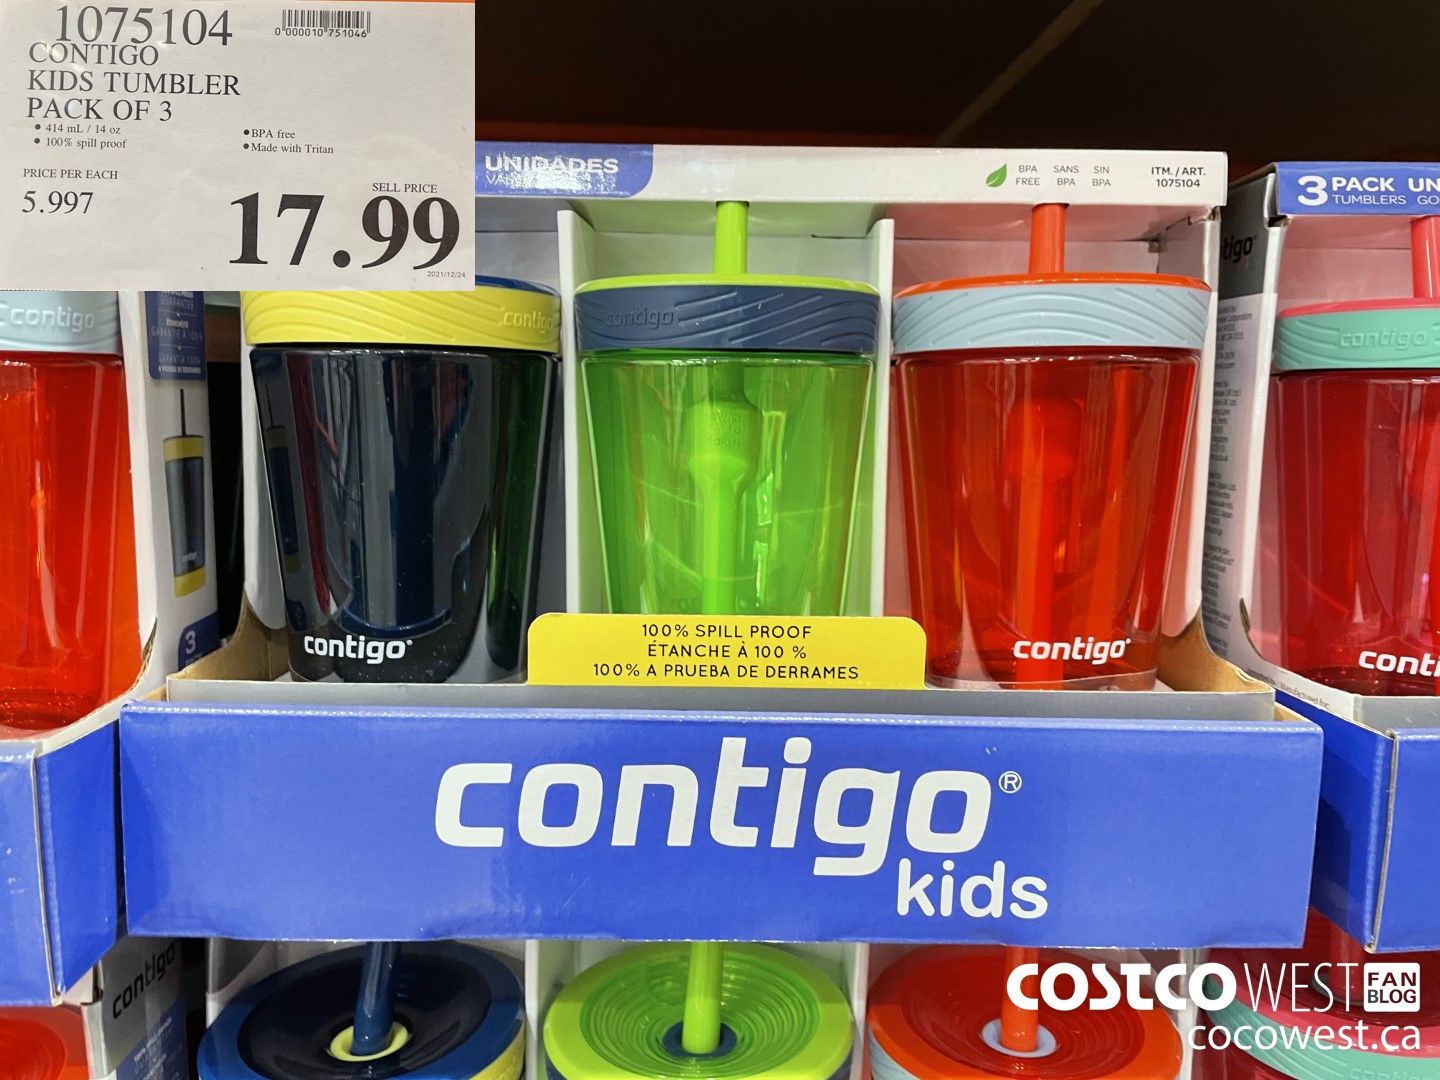 Contigo Kids 14oz BPA Free Antimicrobial Leak-Proof Tumblers Set 3 Pc. 